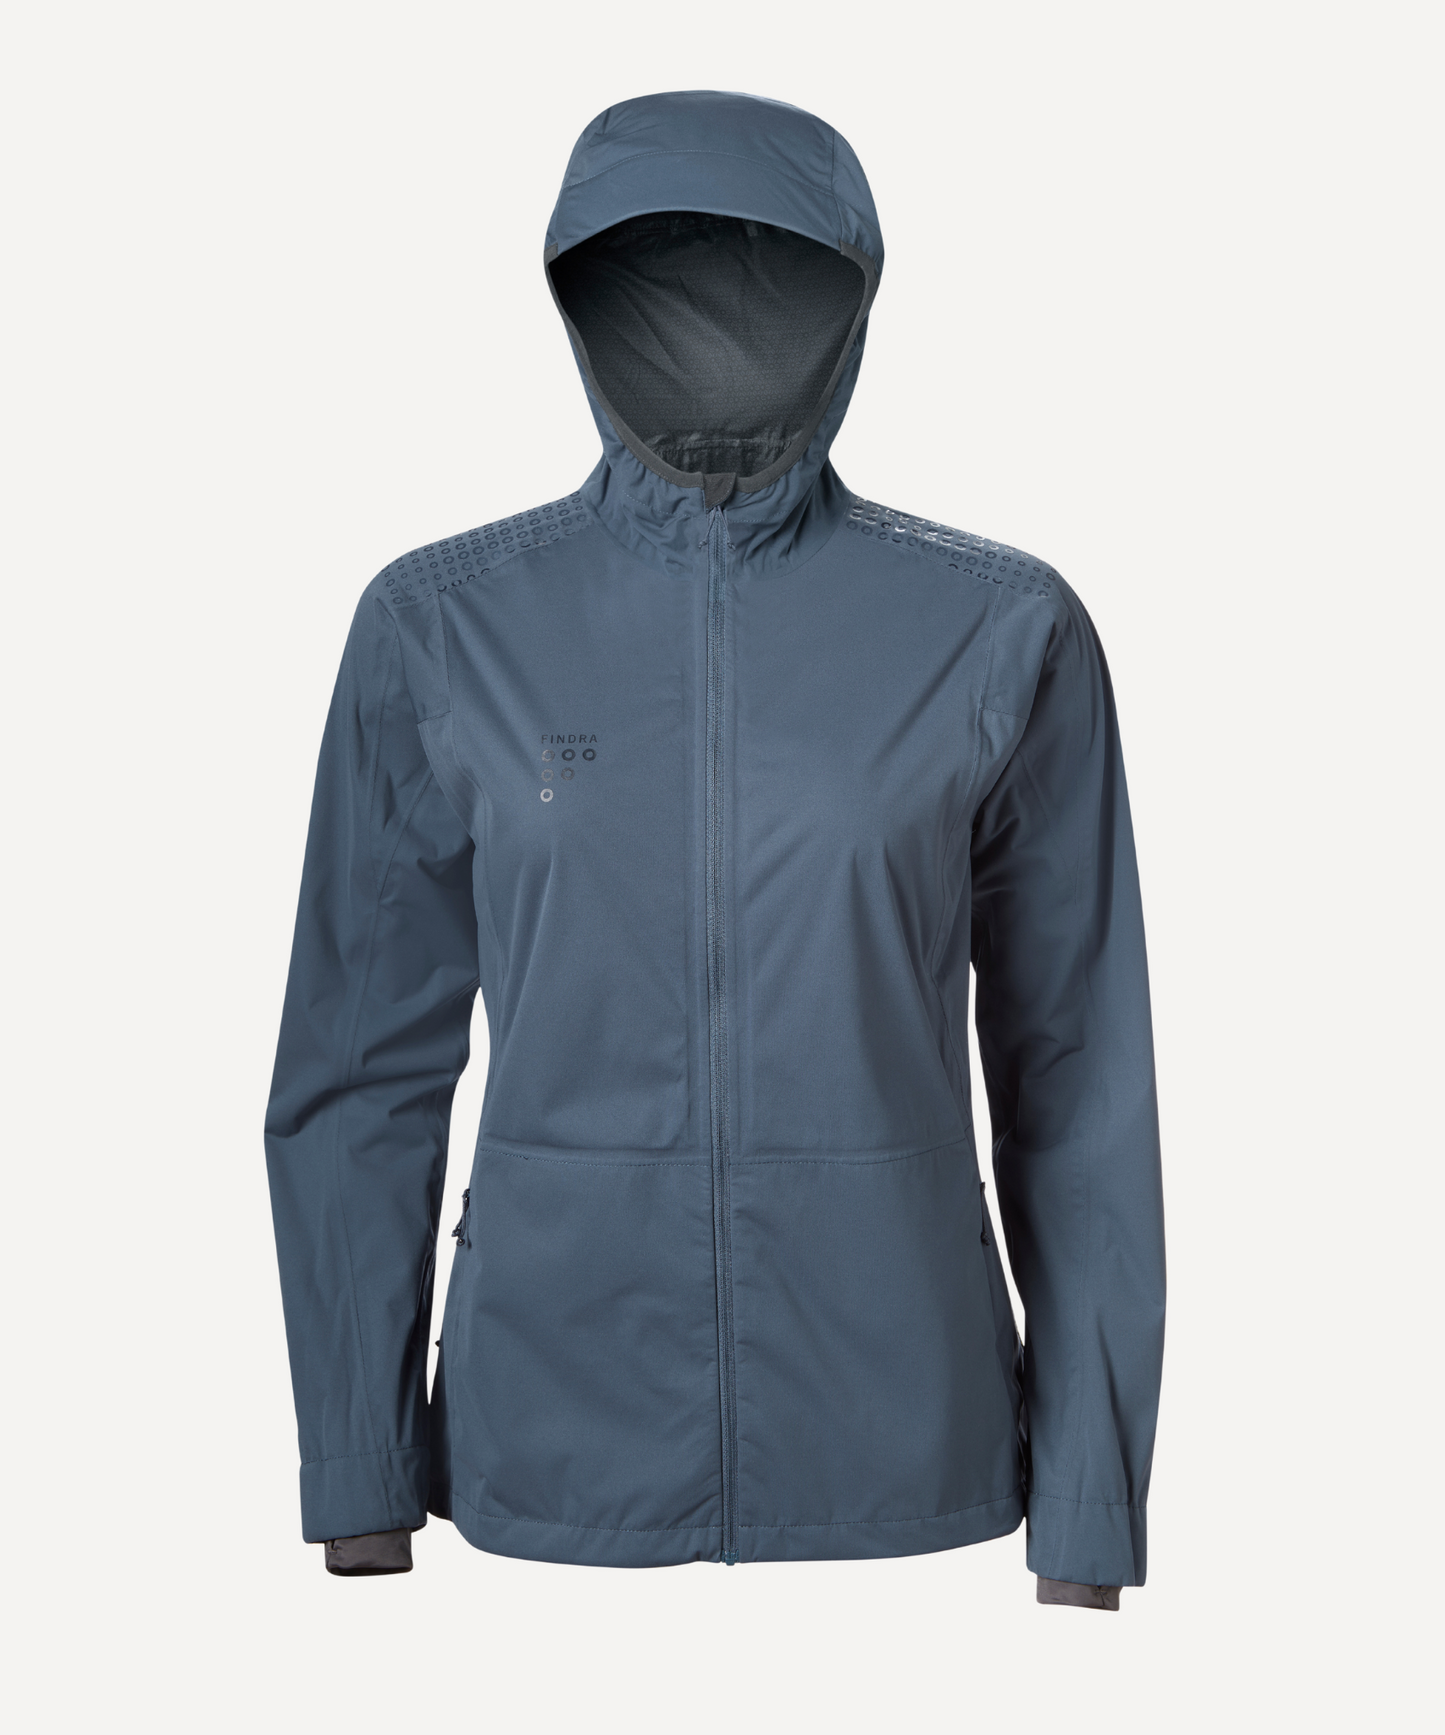 Stroma Waterproof Jacket